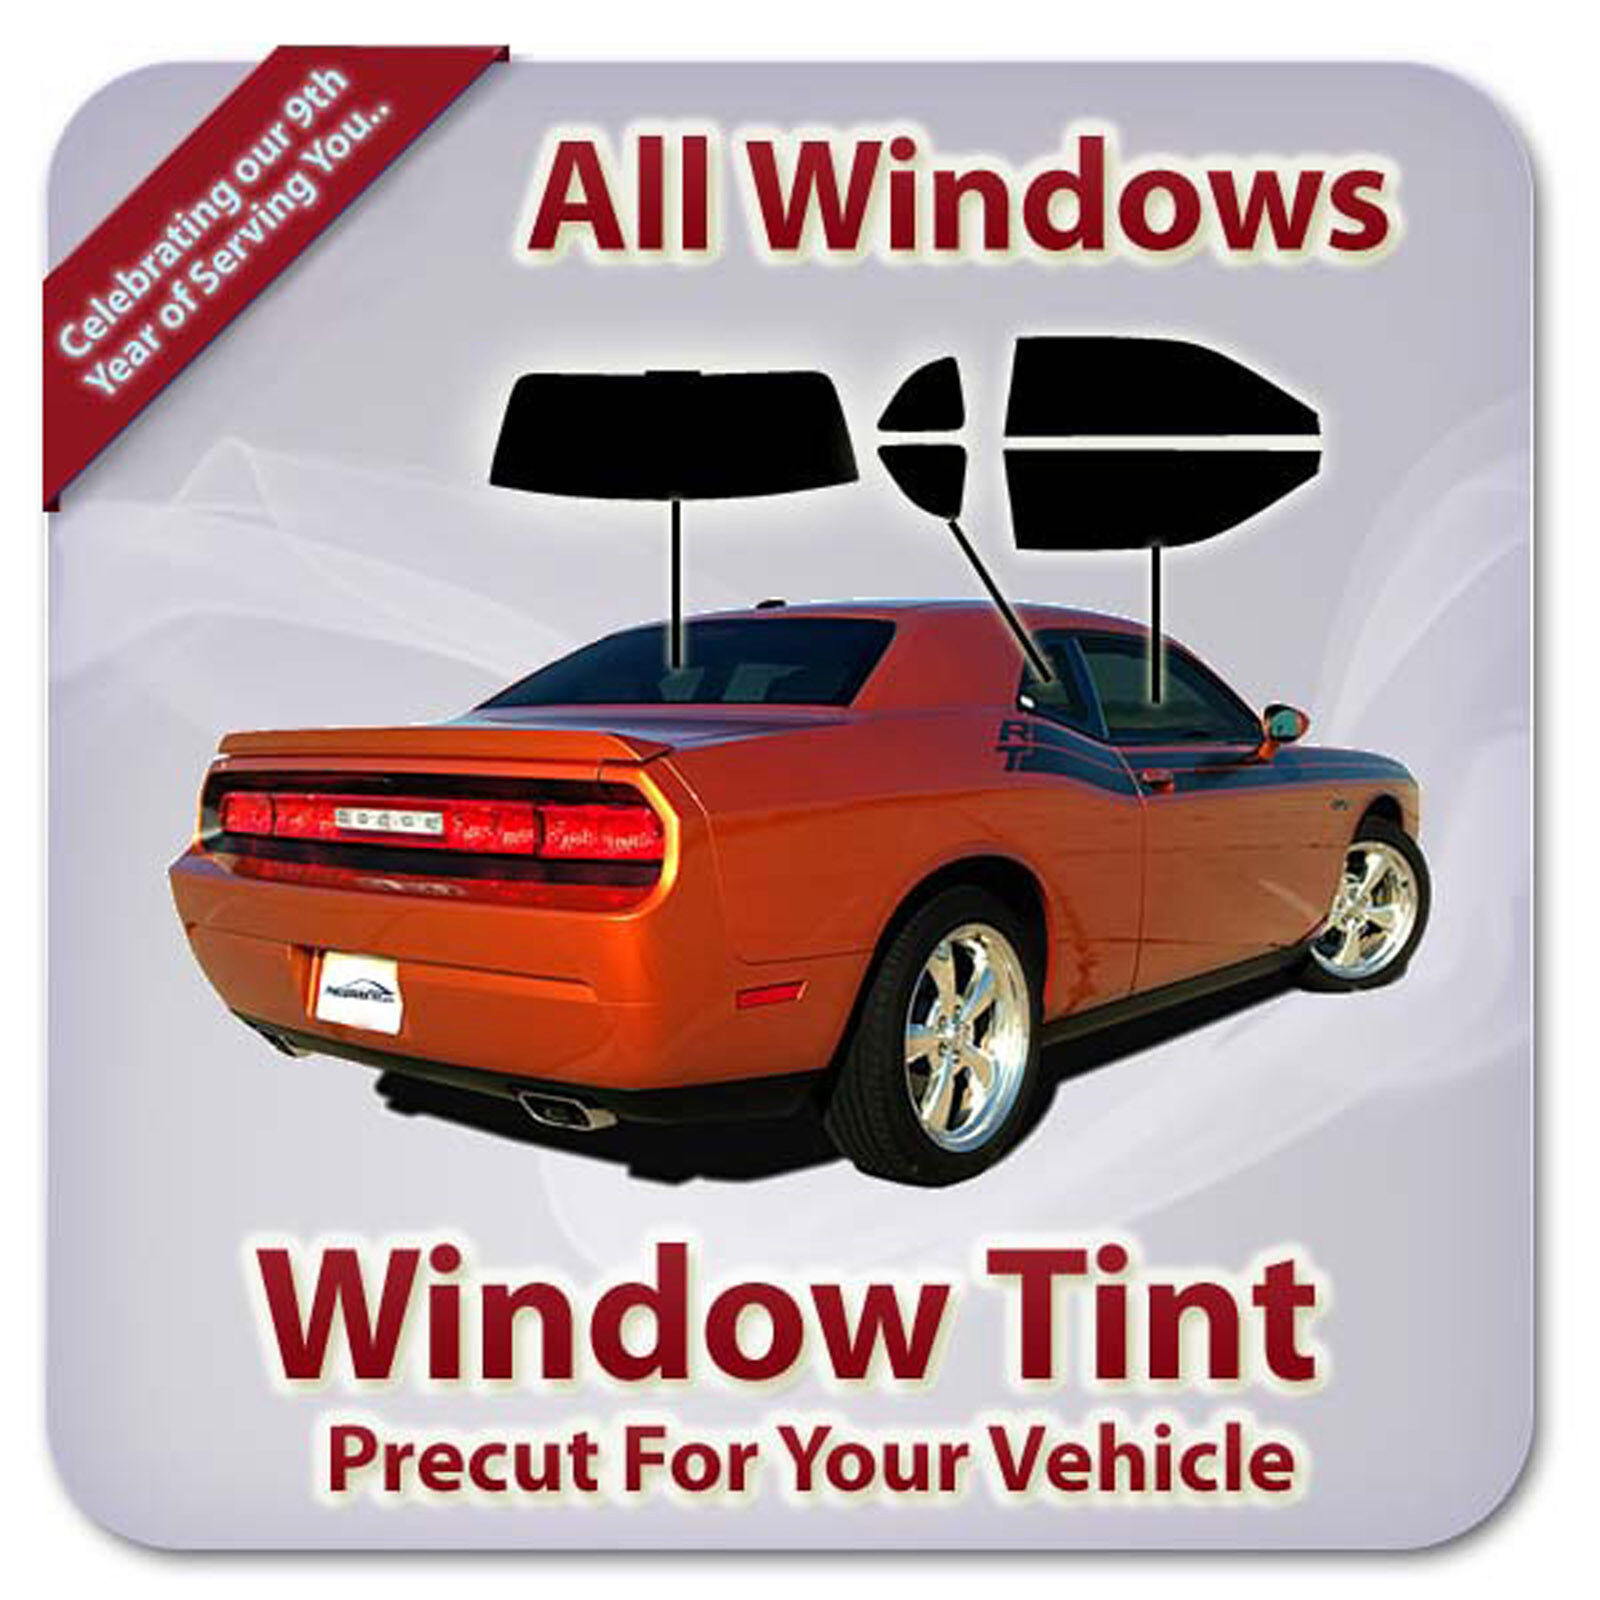 Precut Window Tint For Honda Civic 4 Door 2006-2011 (All Windows)